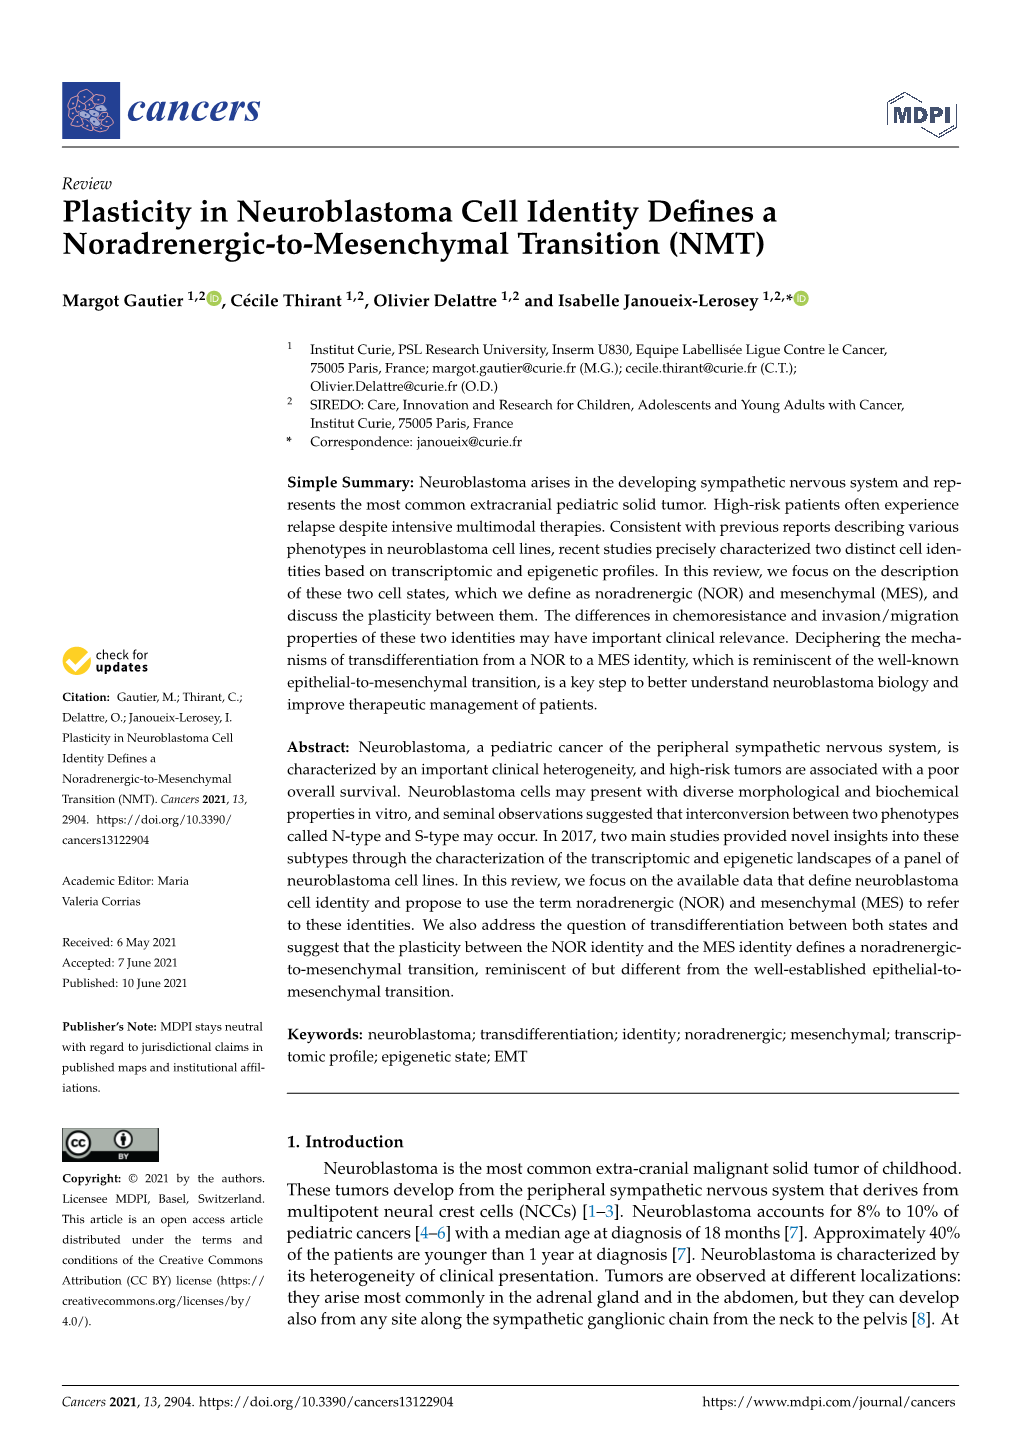 Plasticity in Neuroblastoma Cell Identity Defines a Noradrenergic-To